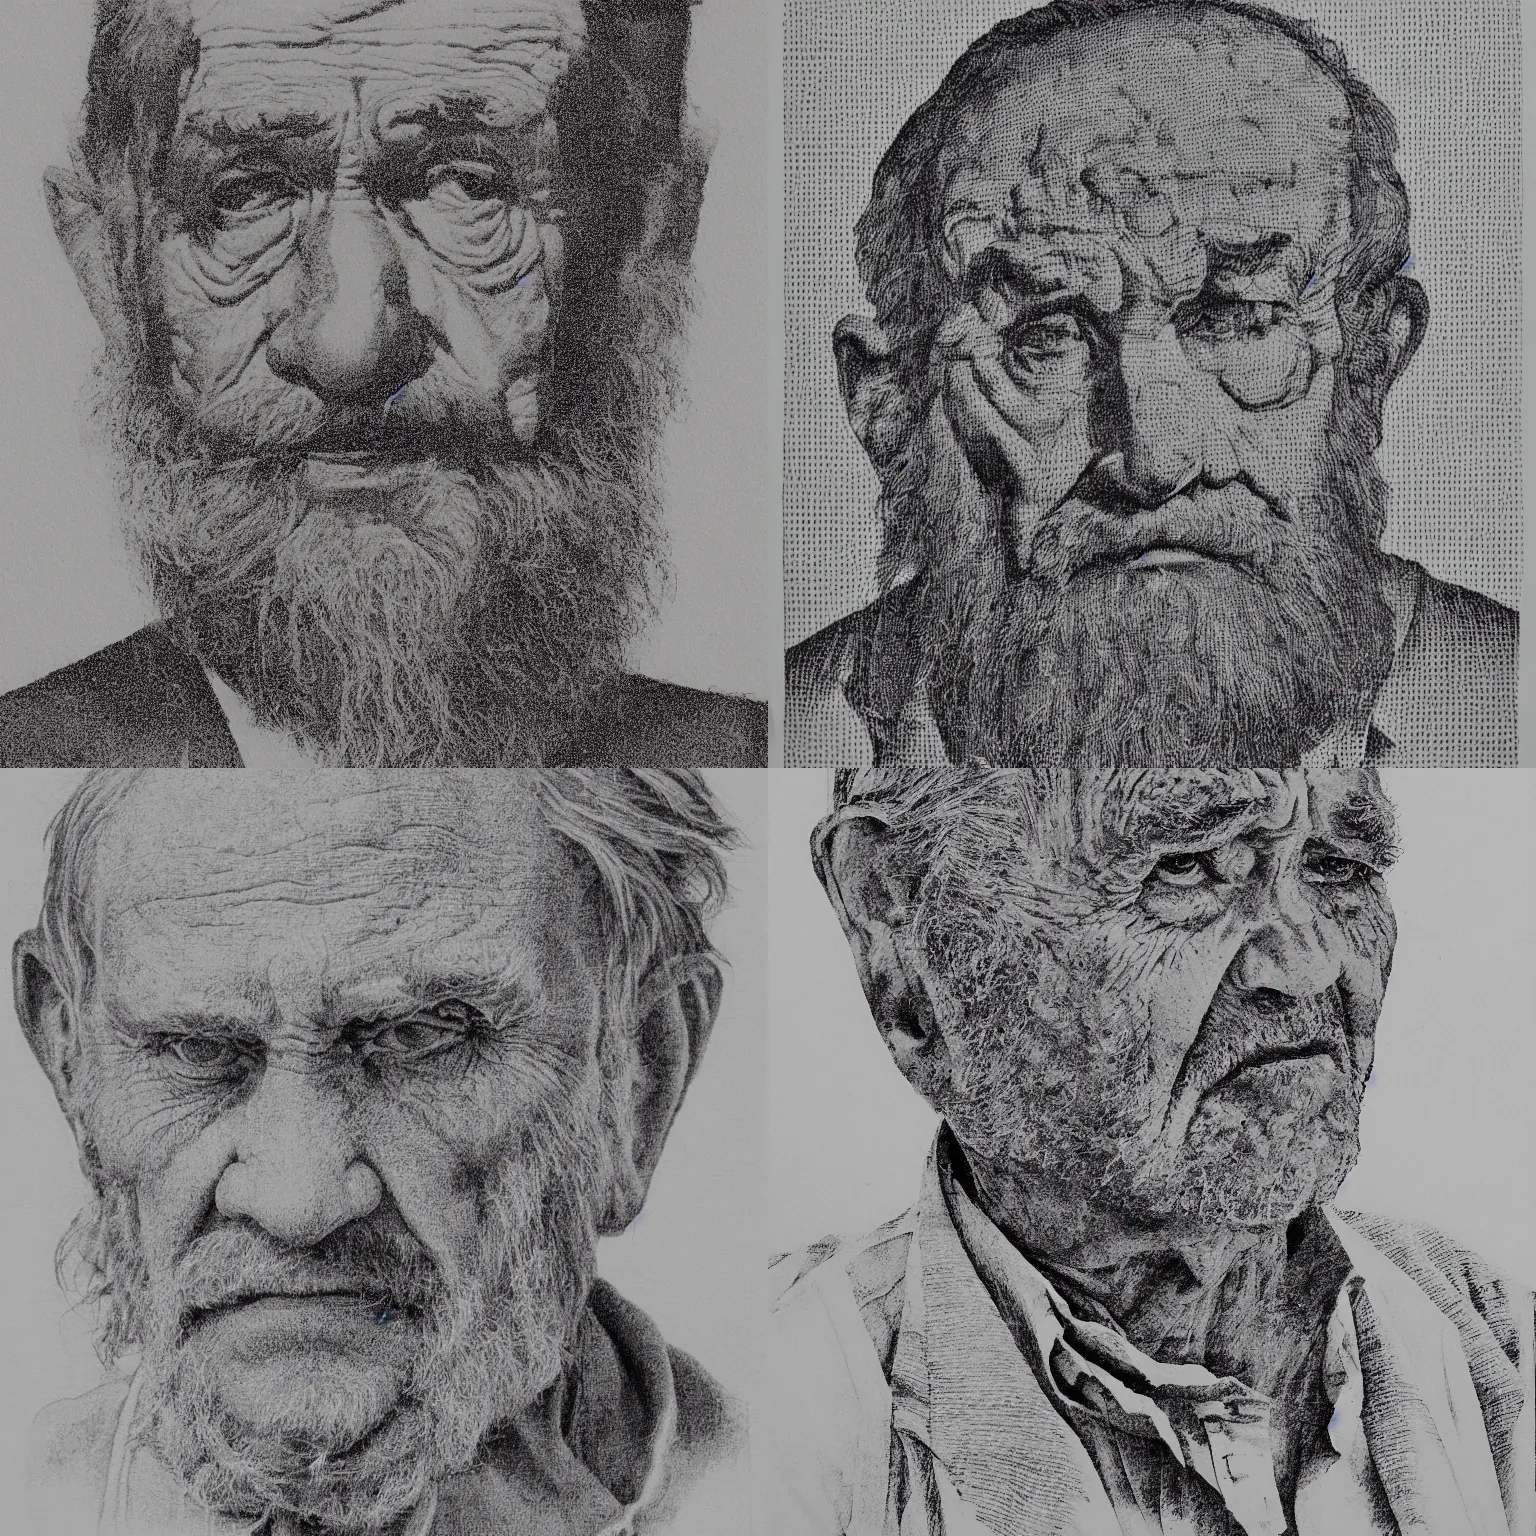 Prompt: crosshatch portrait of old man